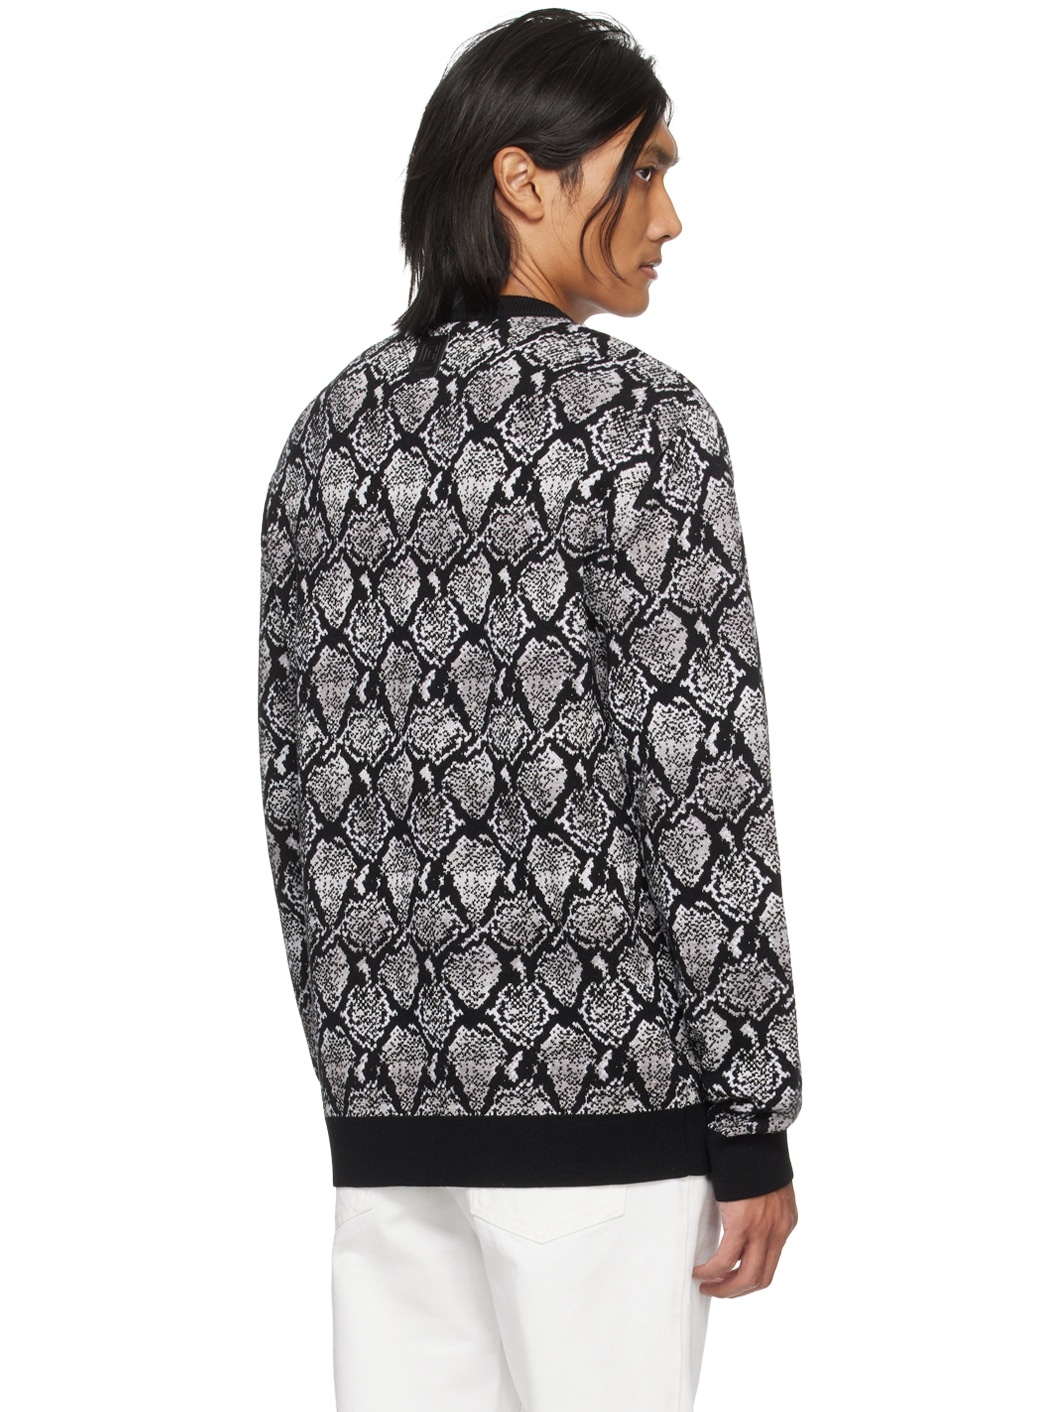 Black & Gray Snakeskin Sweater - 3